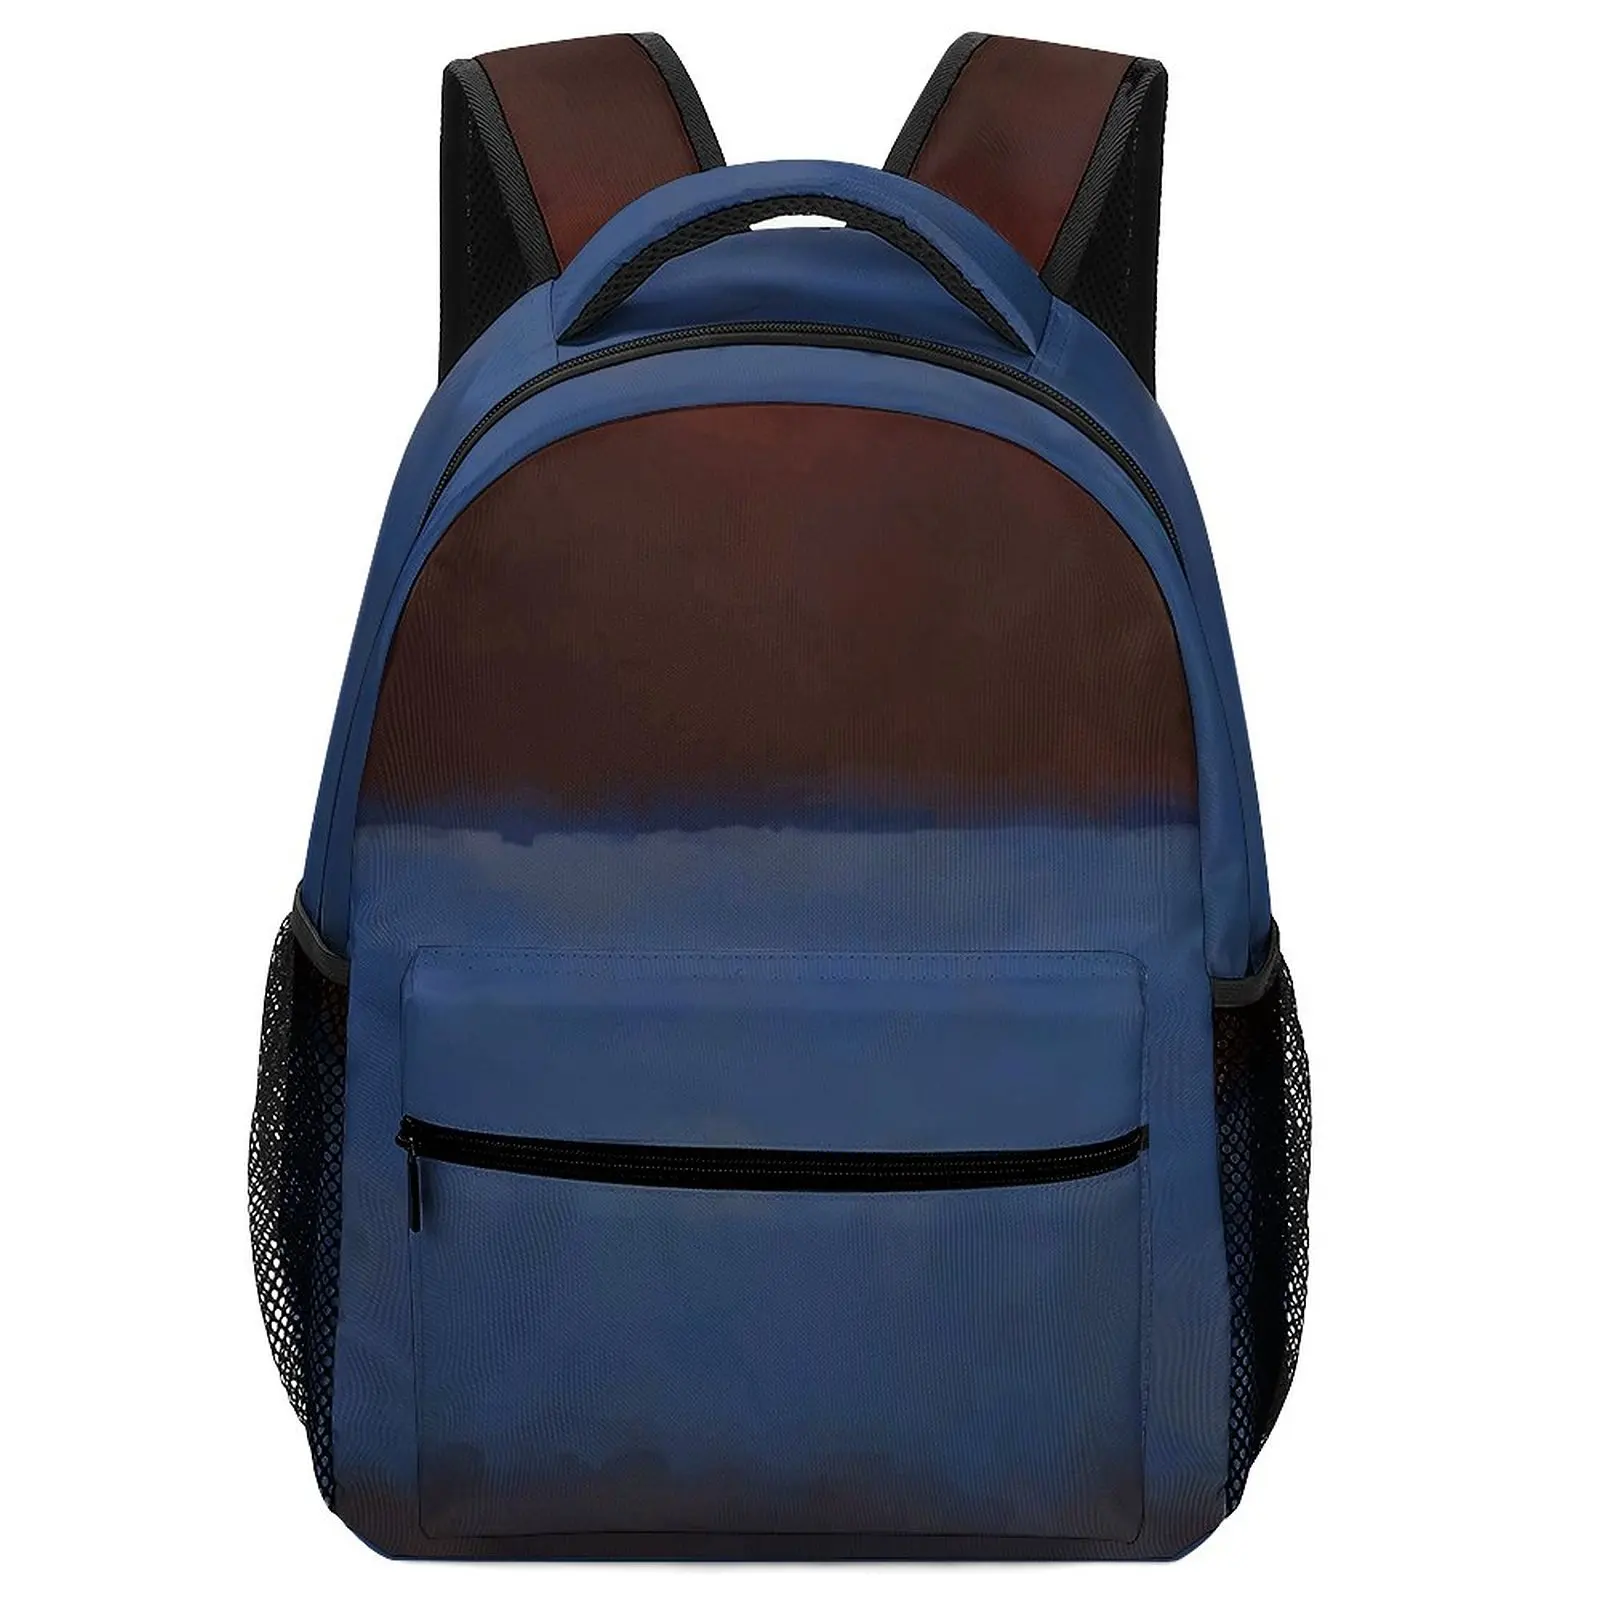 2022 Art Mark Rothko  No. 61 (Rust And Blue) Backpack Girls for Kids Girls Men School Bag Schoolbag Teenage Girls